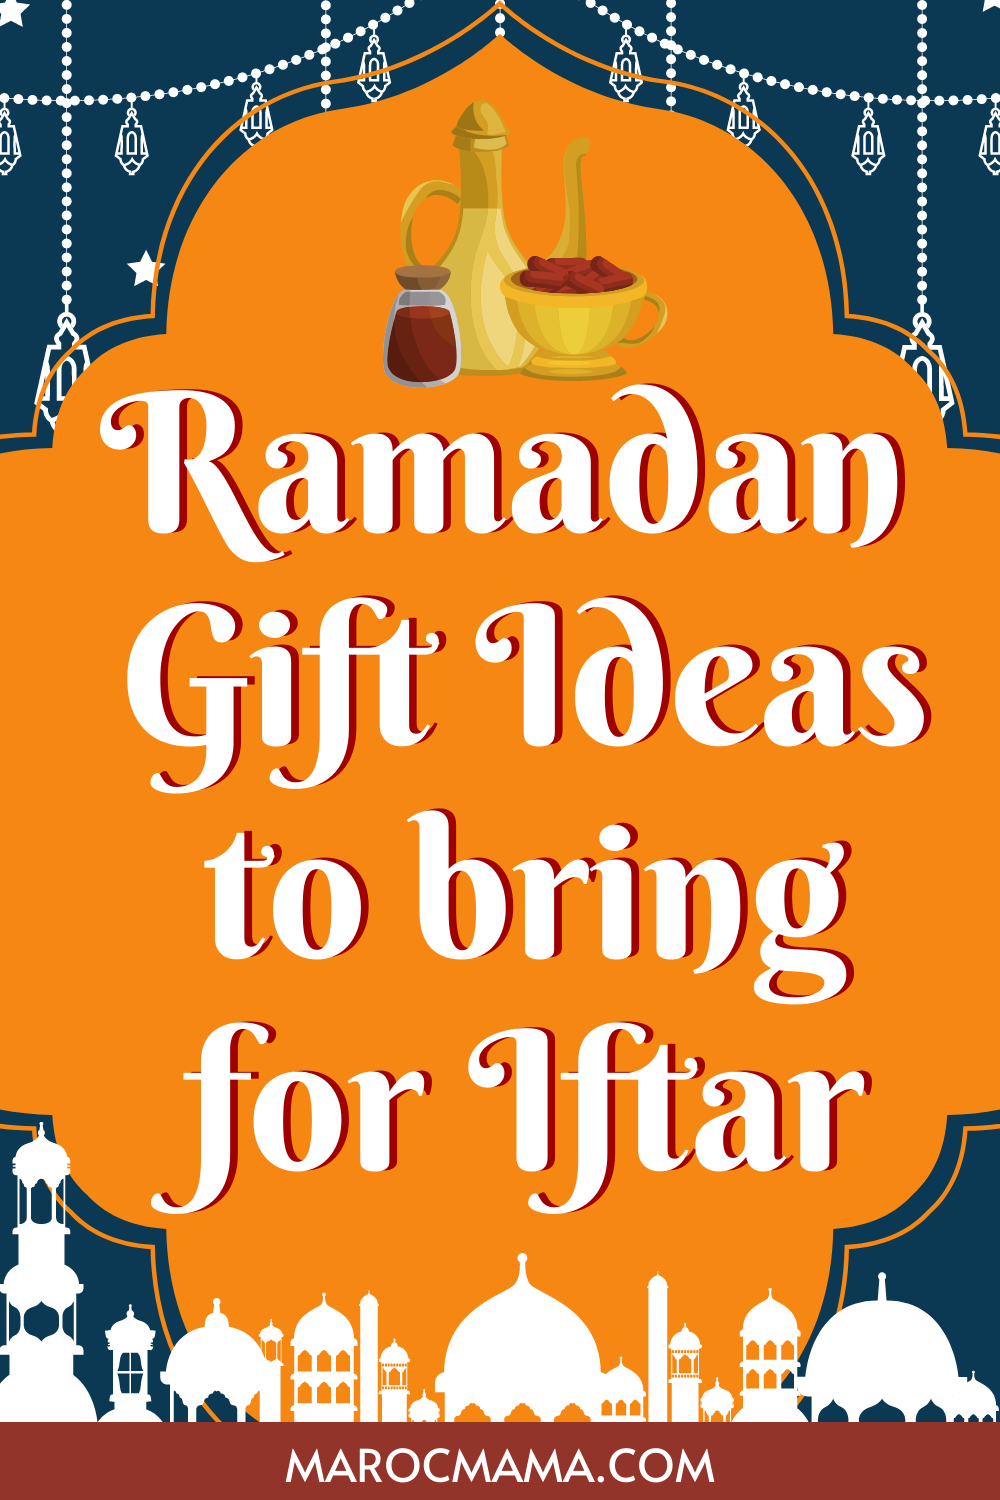 20 Cute Ramadan Decorations for your Home - MarocMama